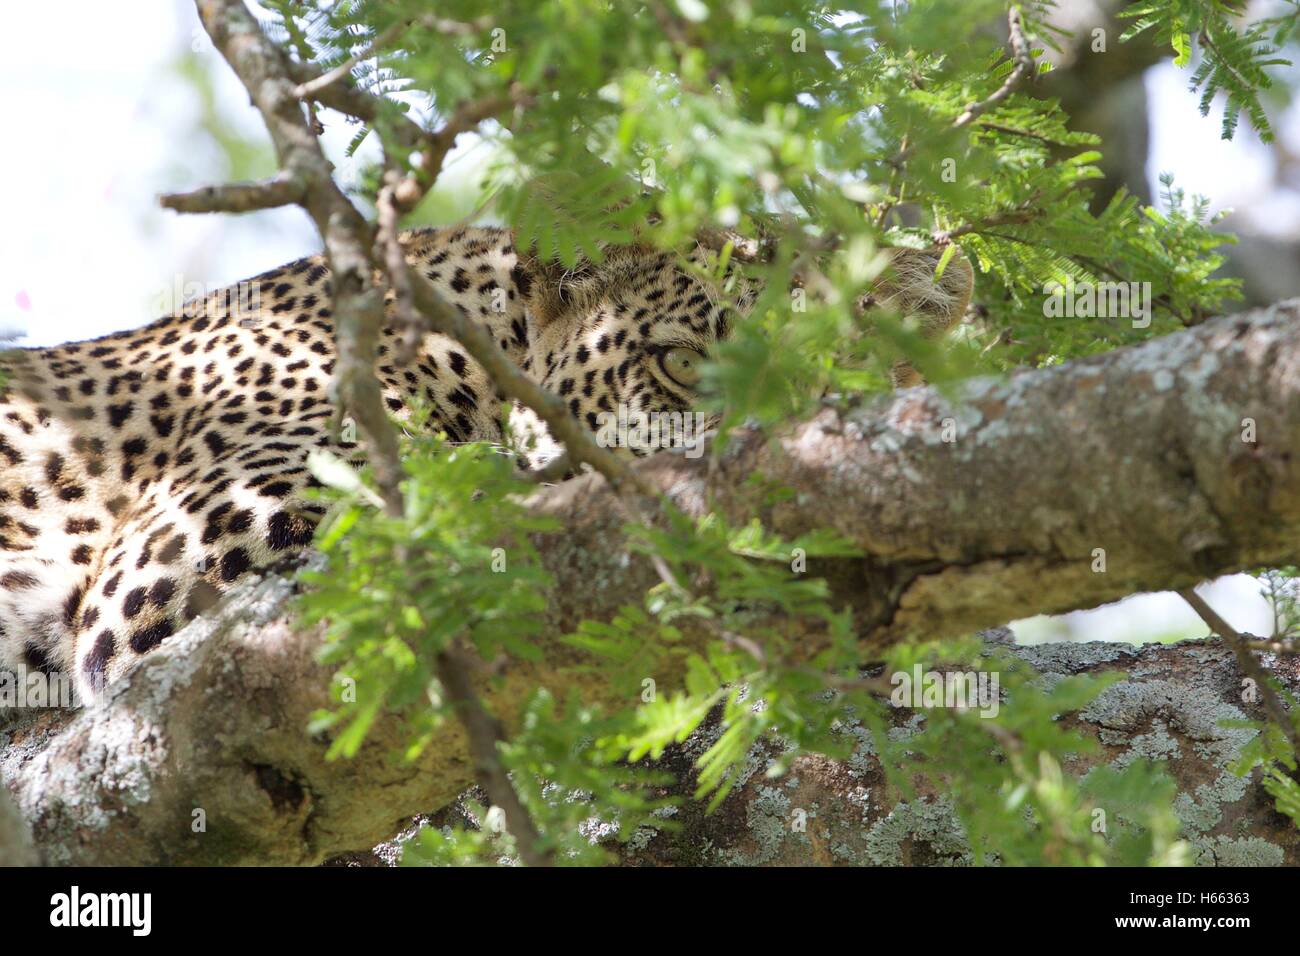 Viewing leopard on safari in Serengeti National Park, Tanzania. Stock Photo